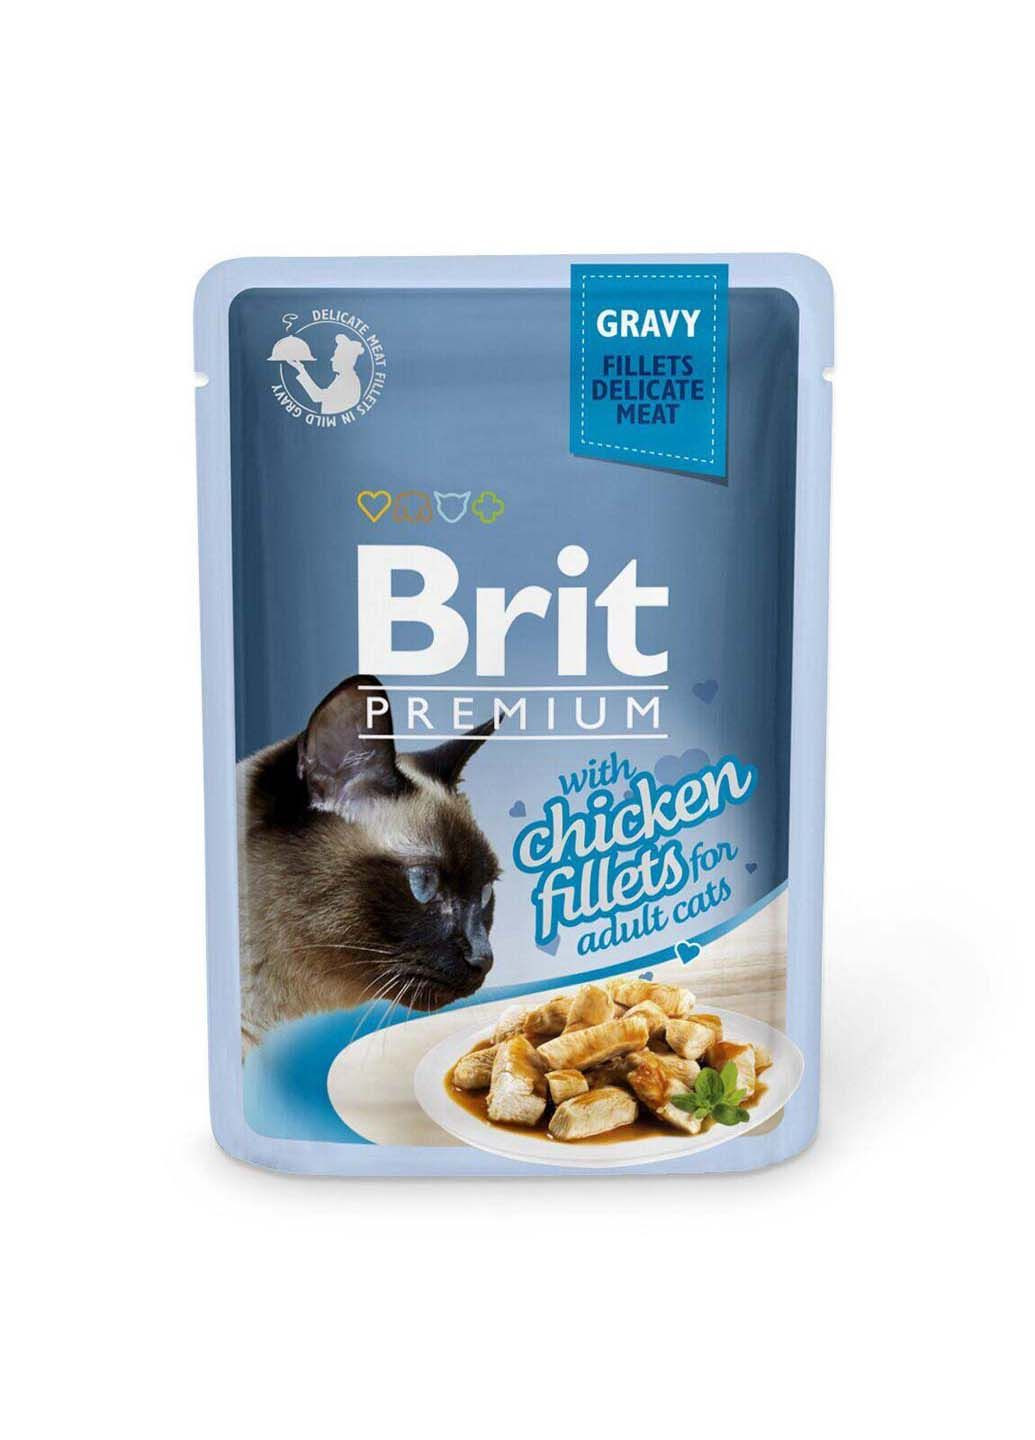 Влажный корм Cat Chicken Fillets Gravy pouch для кошек Brit Premium (286472987)